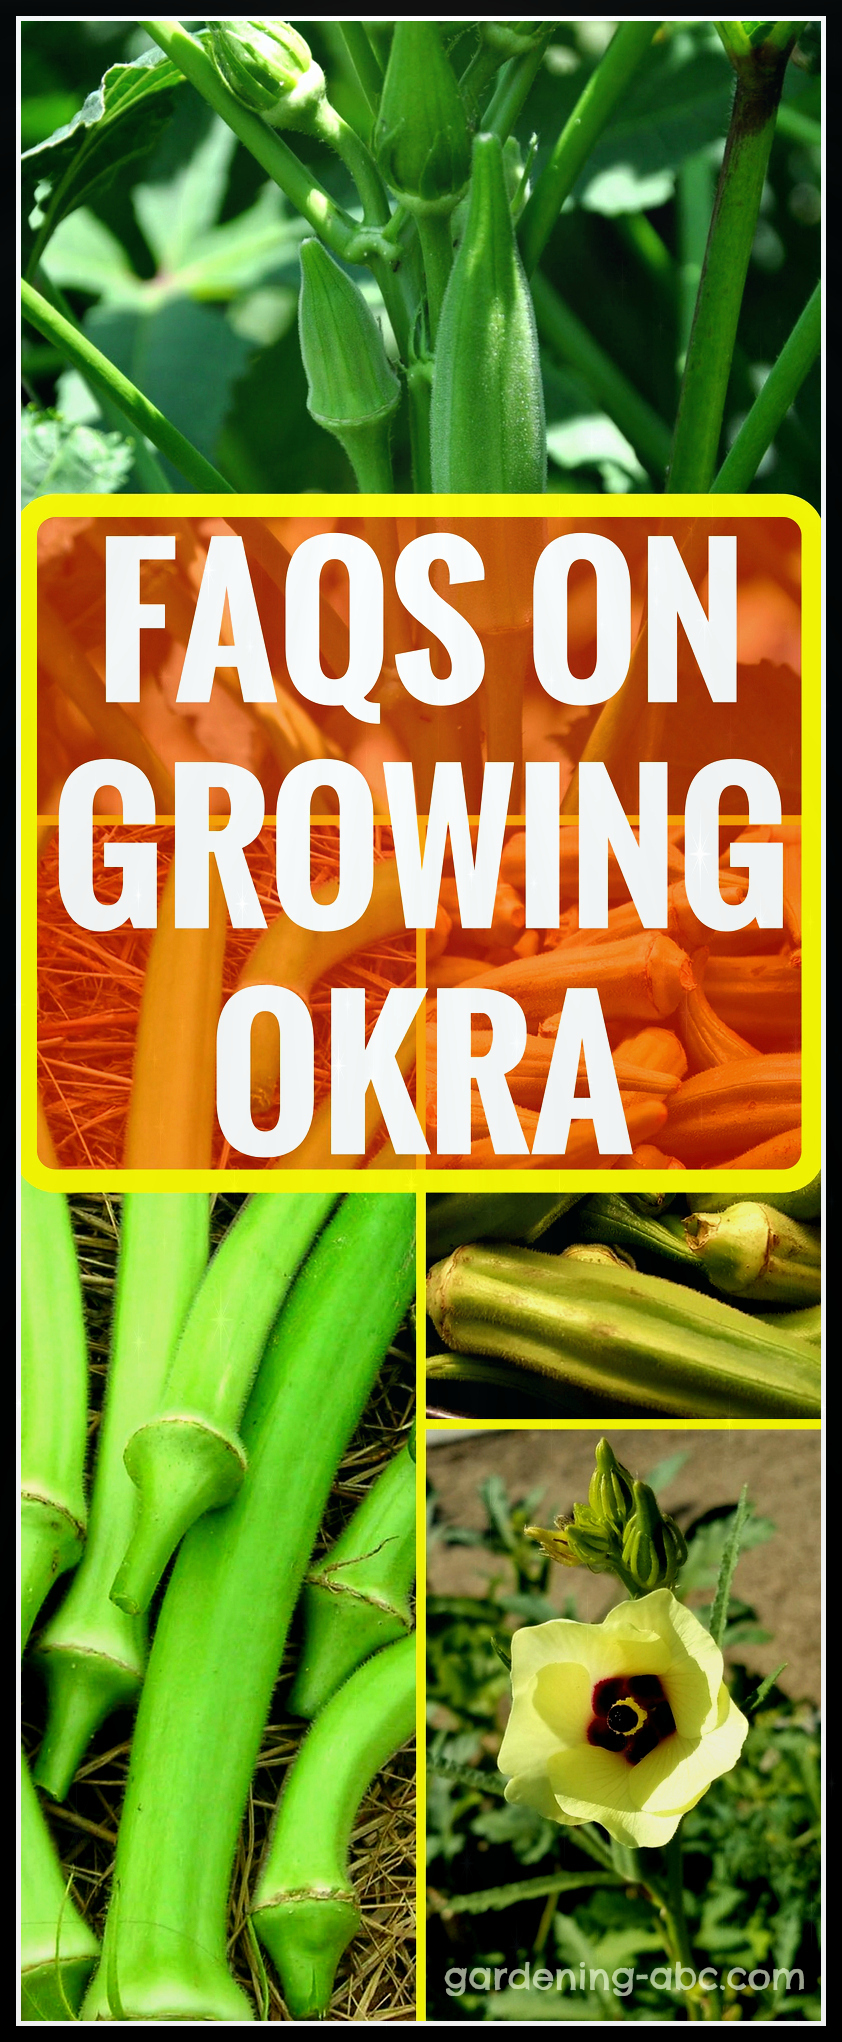 okra growing faqs